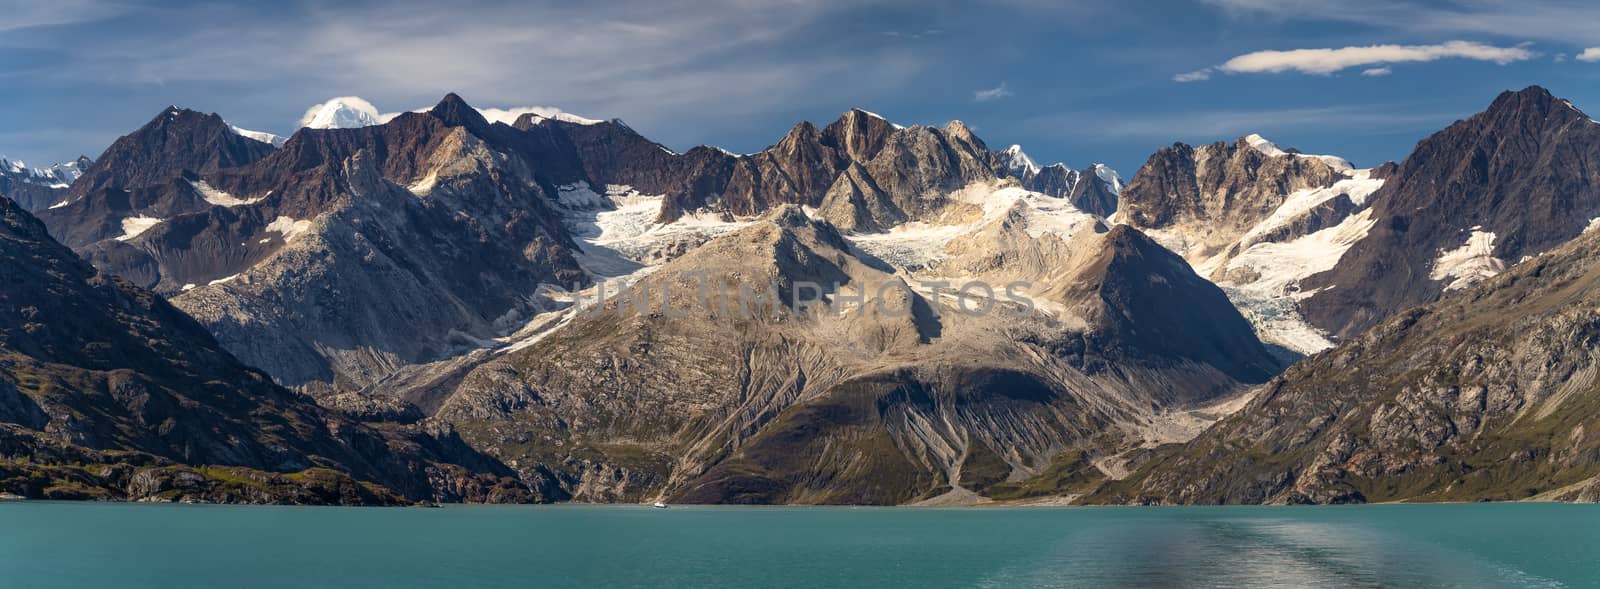 Beautiful panoramic view of mountains in Alaska by DamantisZ